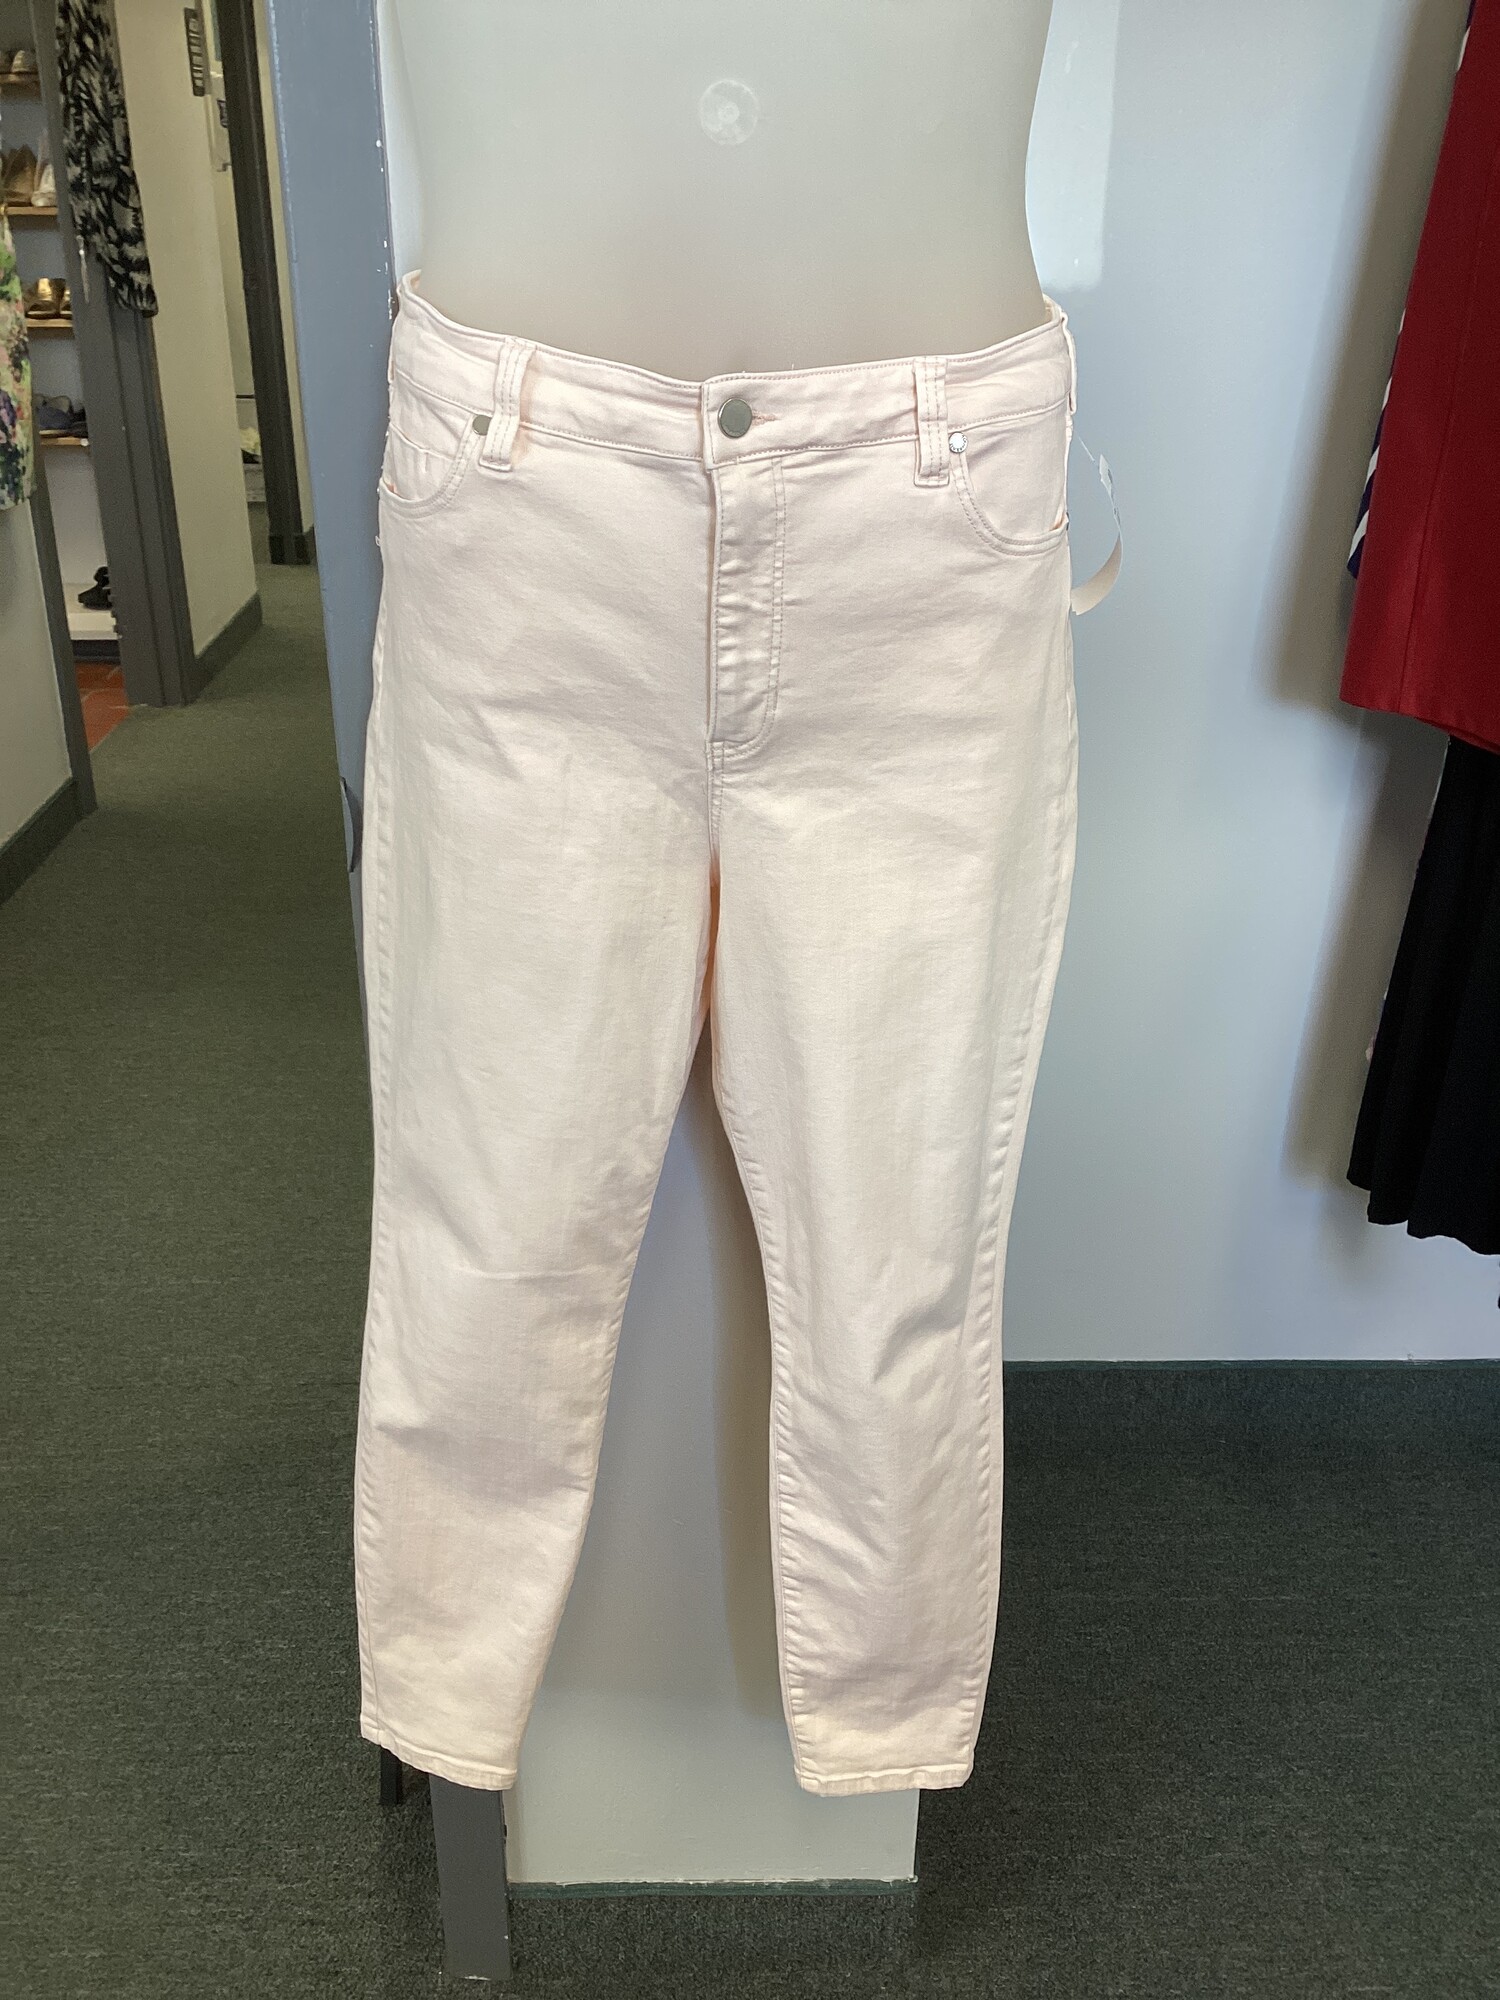 Jeans, Lt Pink, Size: 16 Lrg